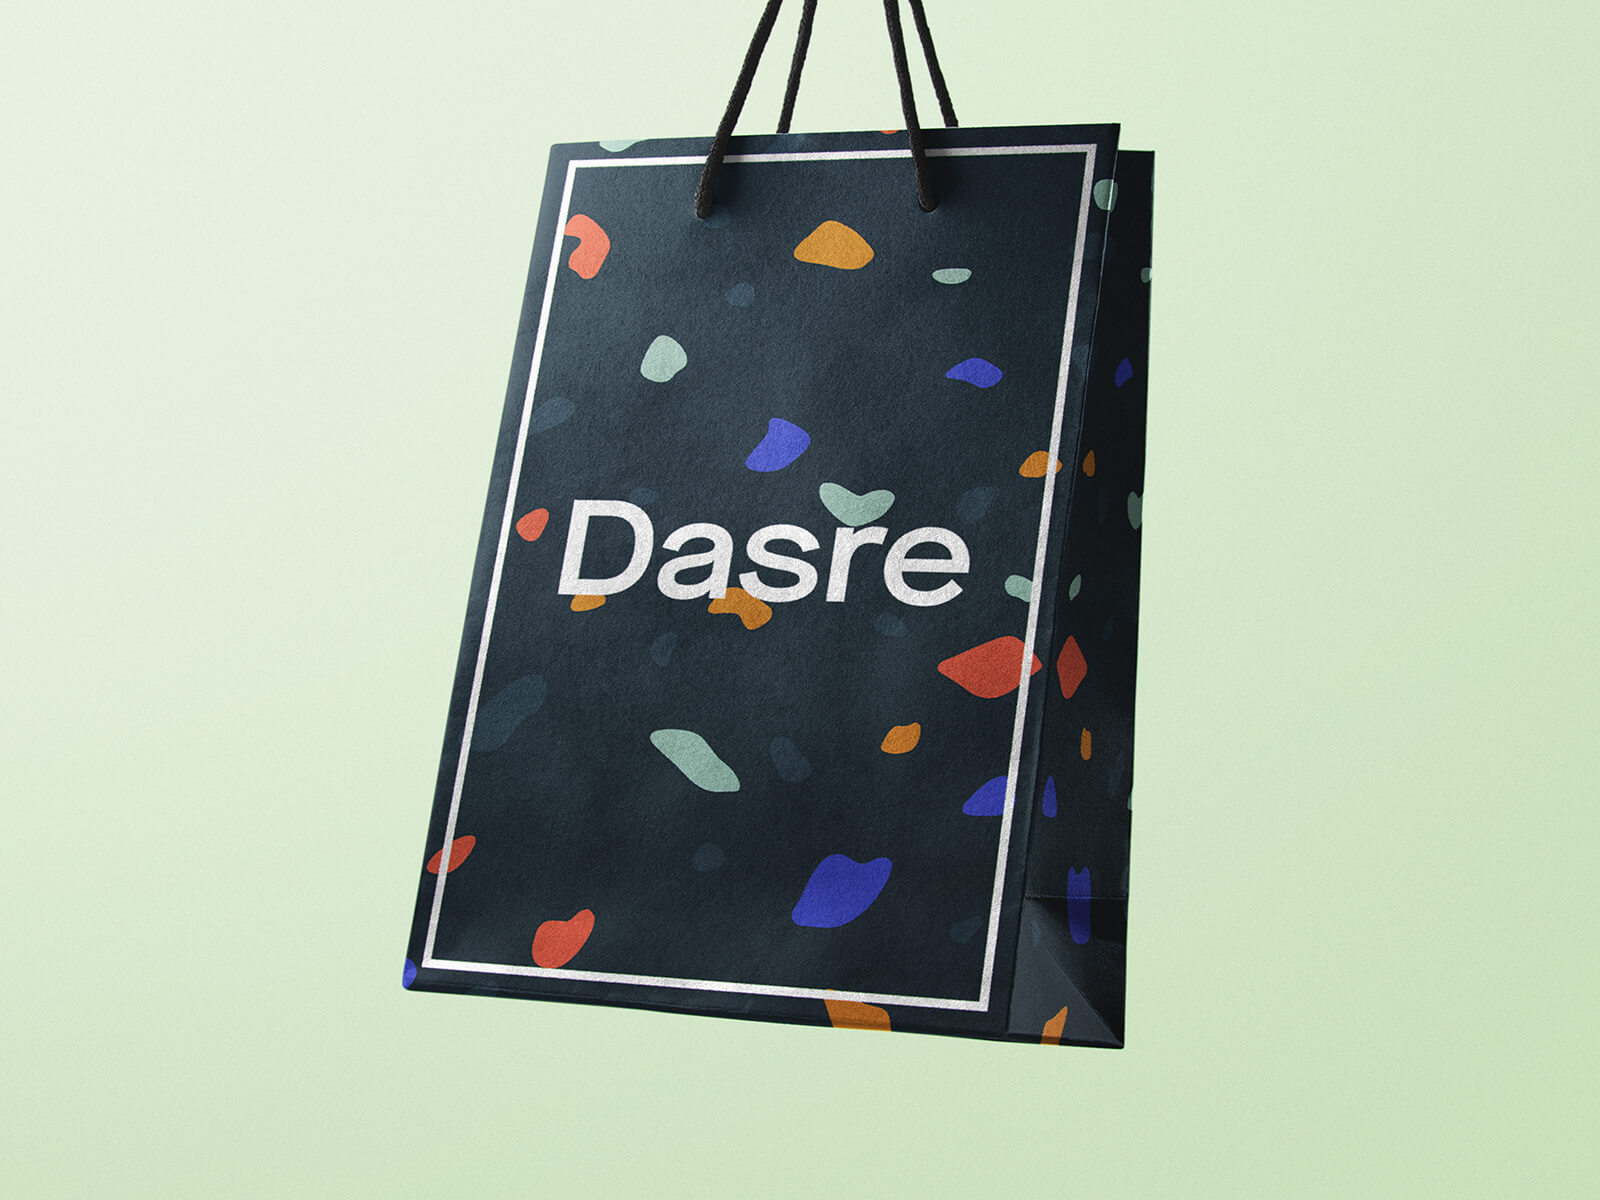 Free Realistic Paper Shopping / Gift Bag Mockup PSD